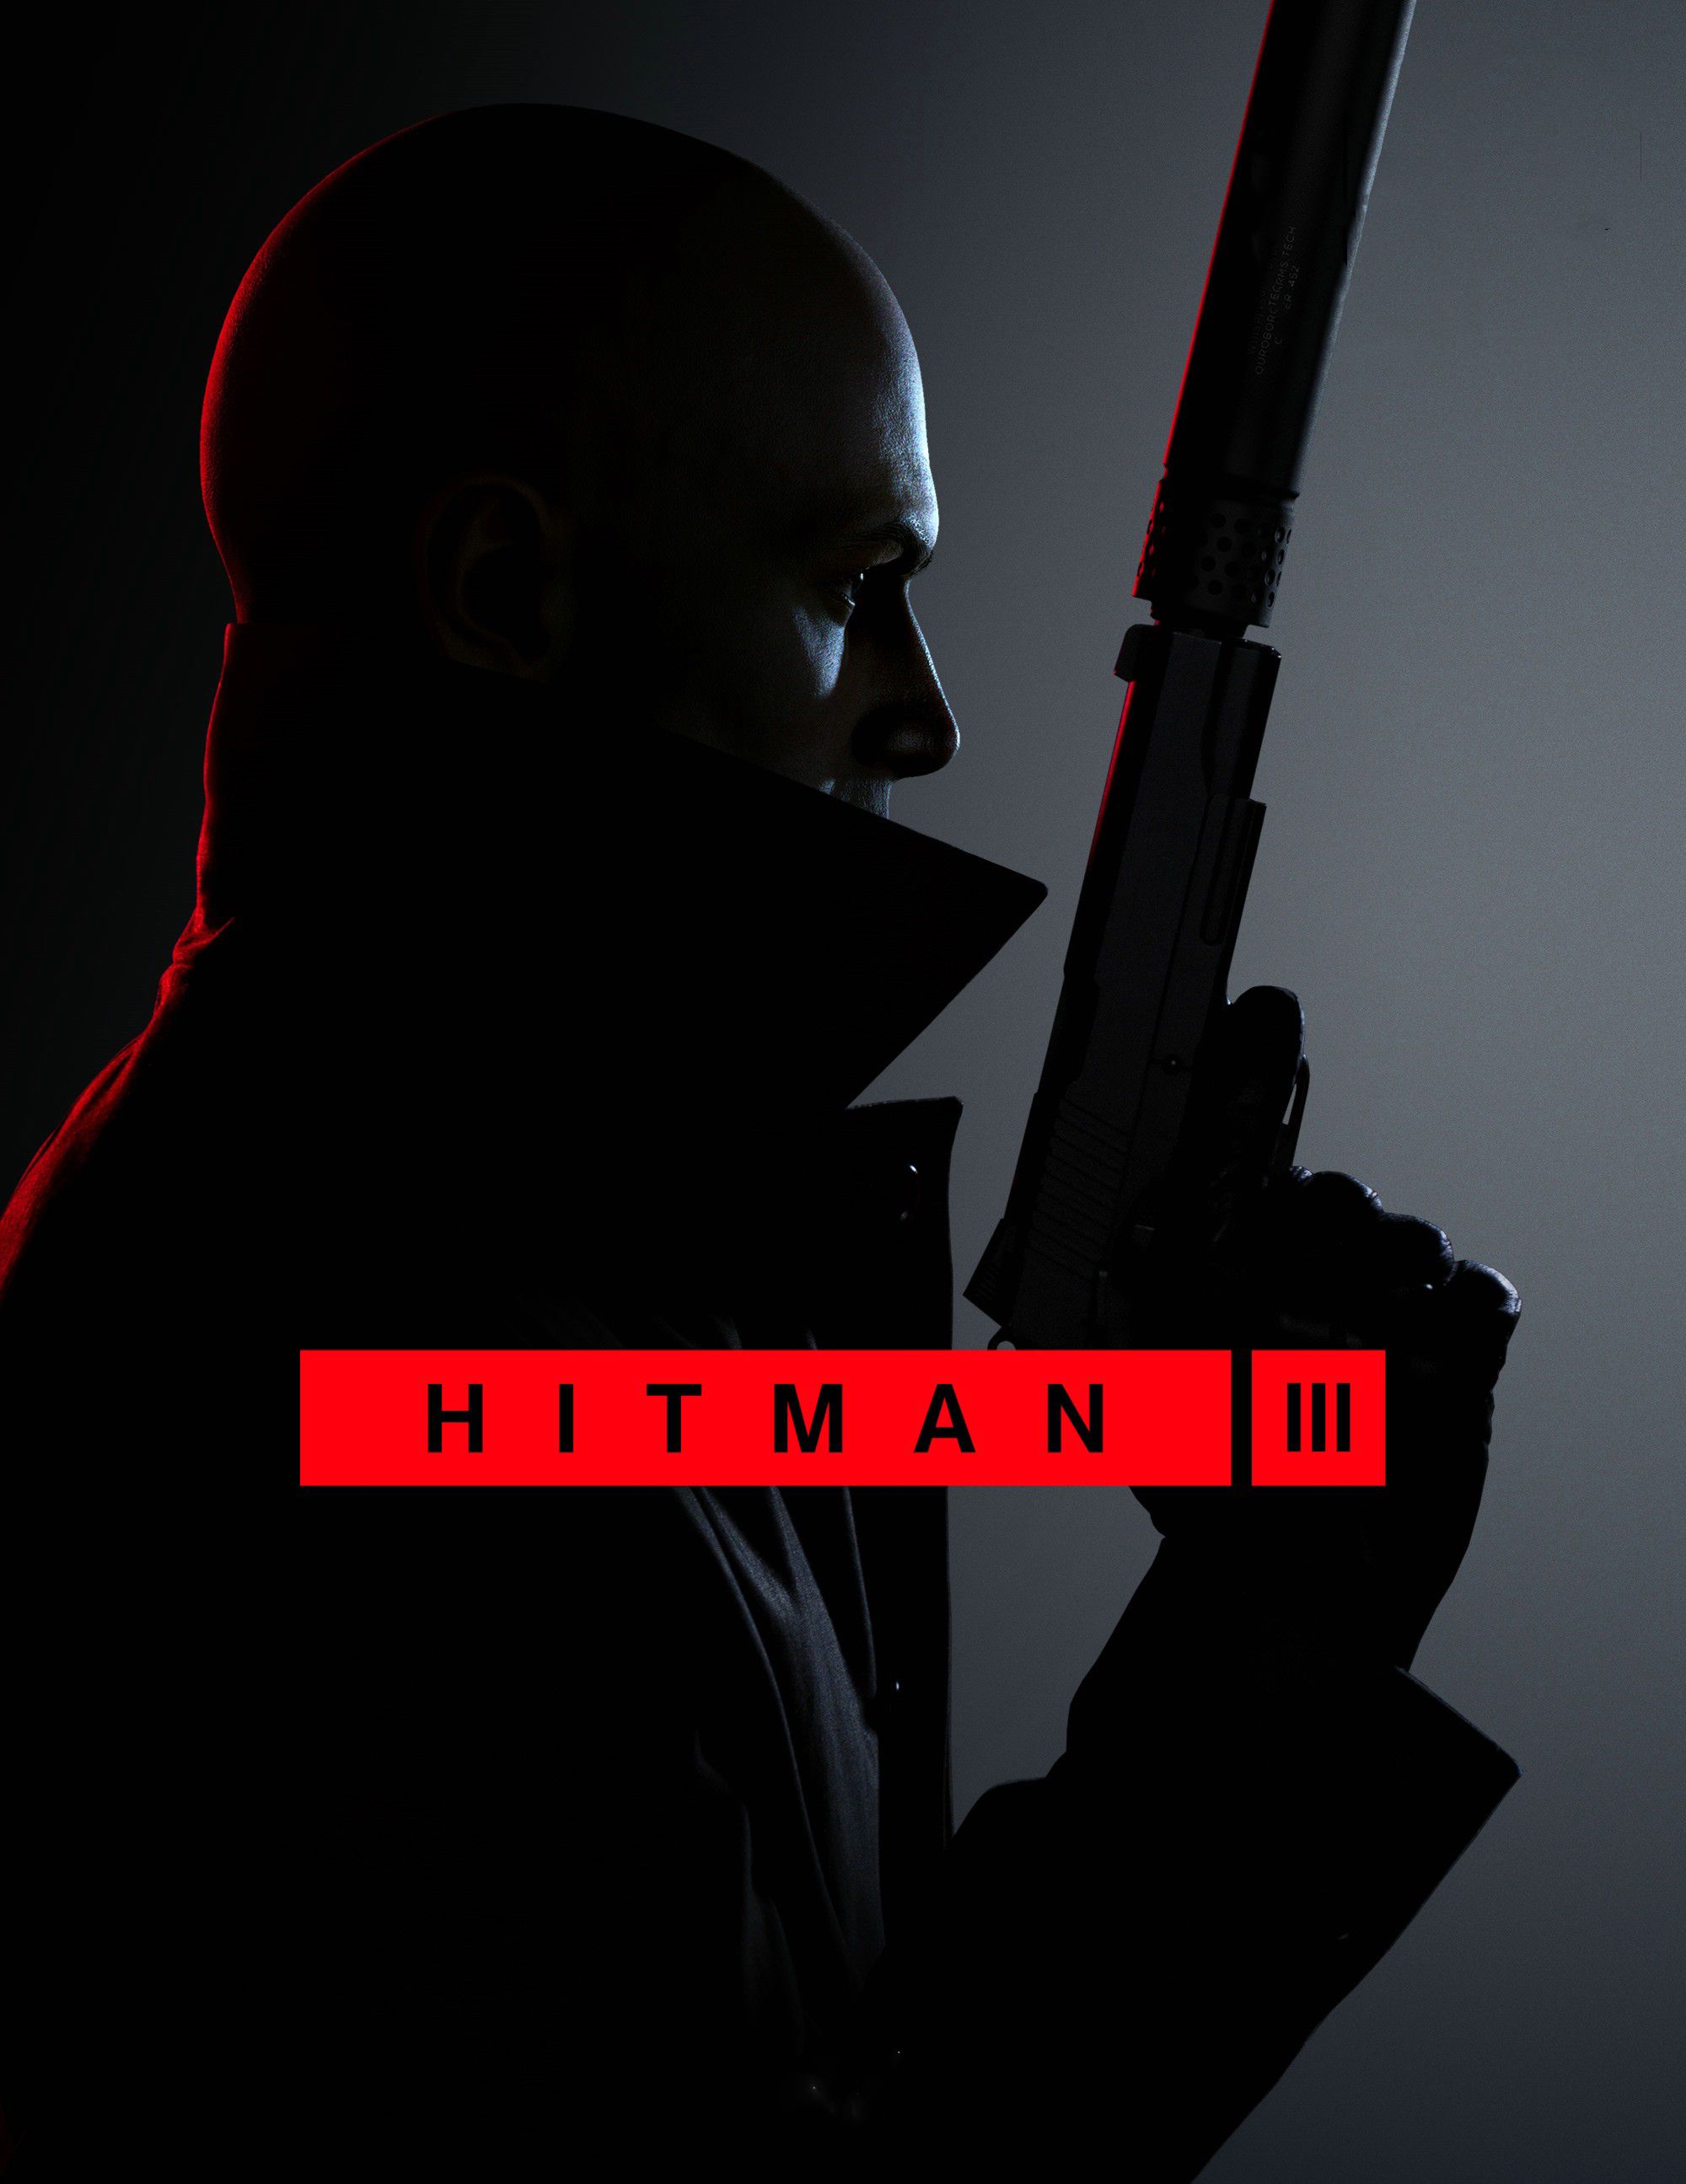 Hitman 3 Key Art Wallpaper, HD Games 4K Wallpaper, Image, Photo and Background